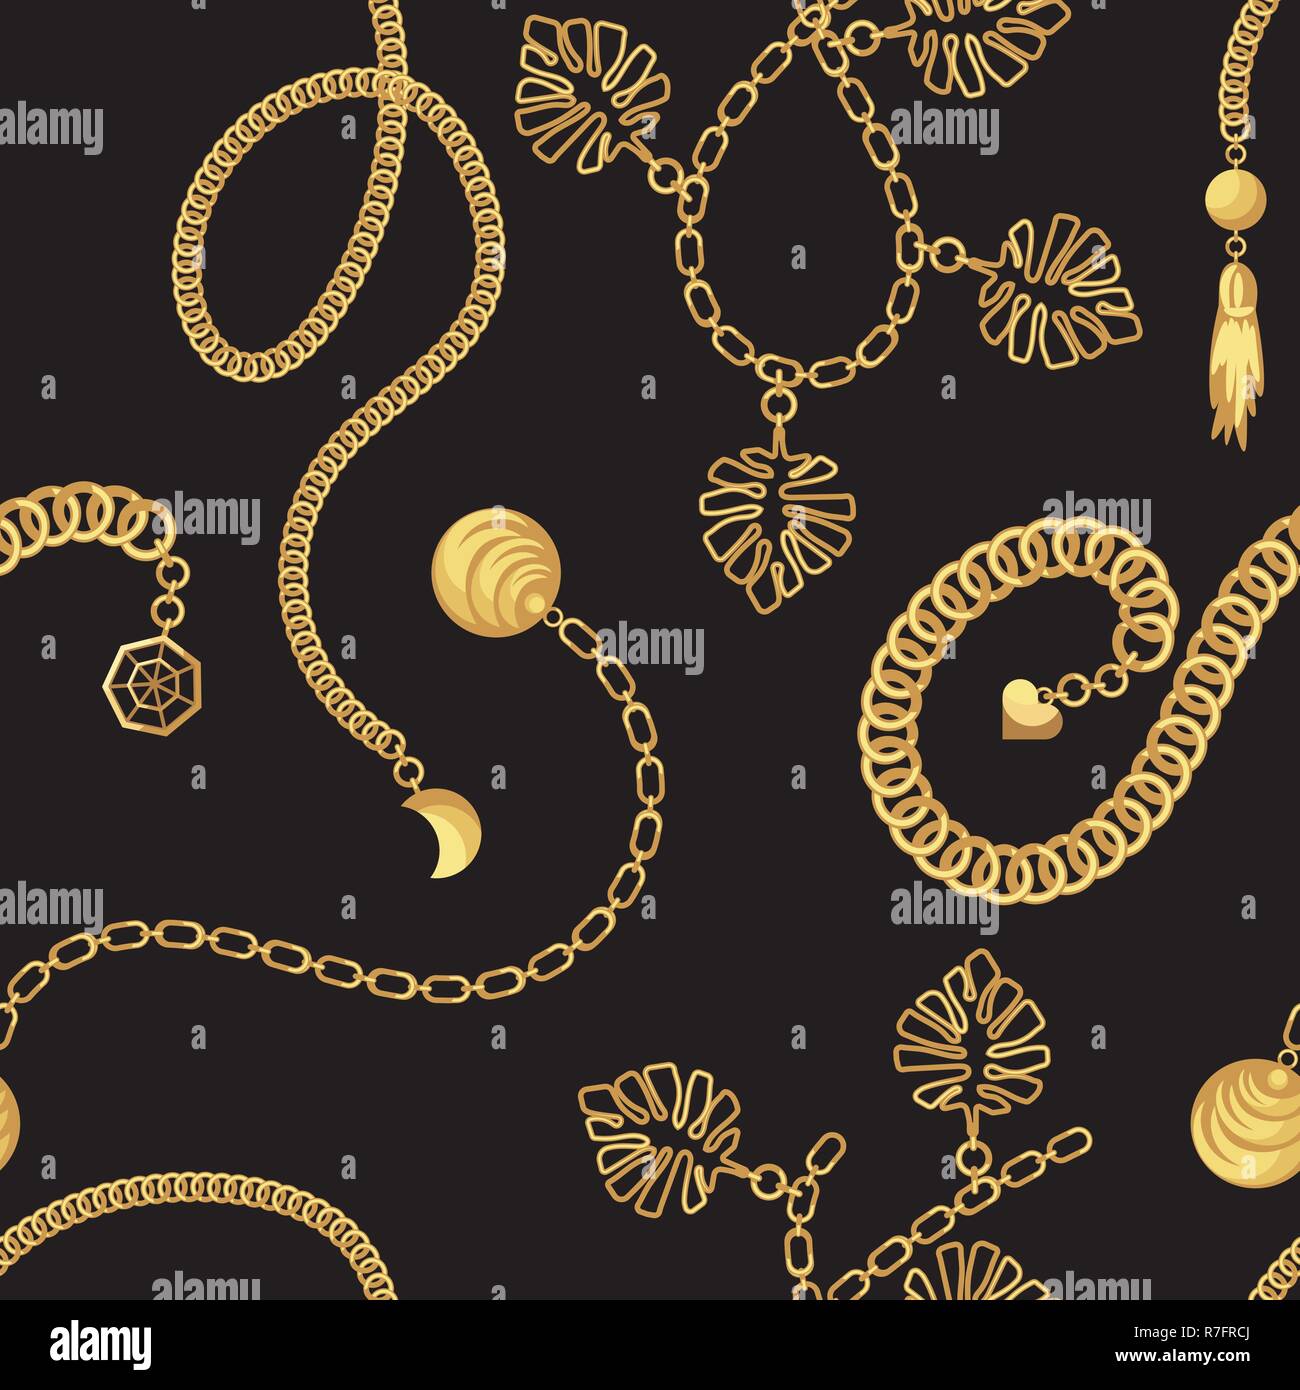 Gold chain belt pattern fashion vector design. Stock Vector